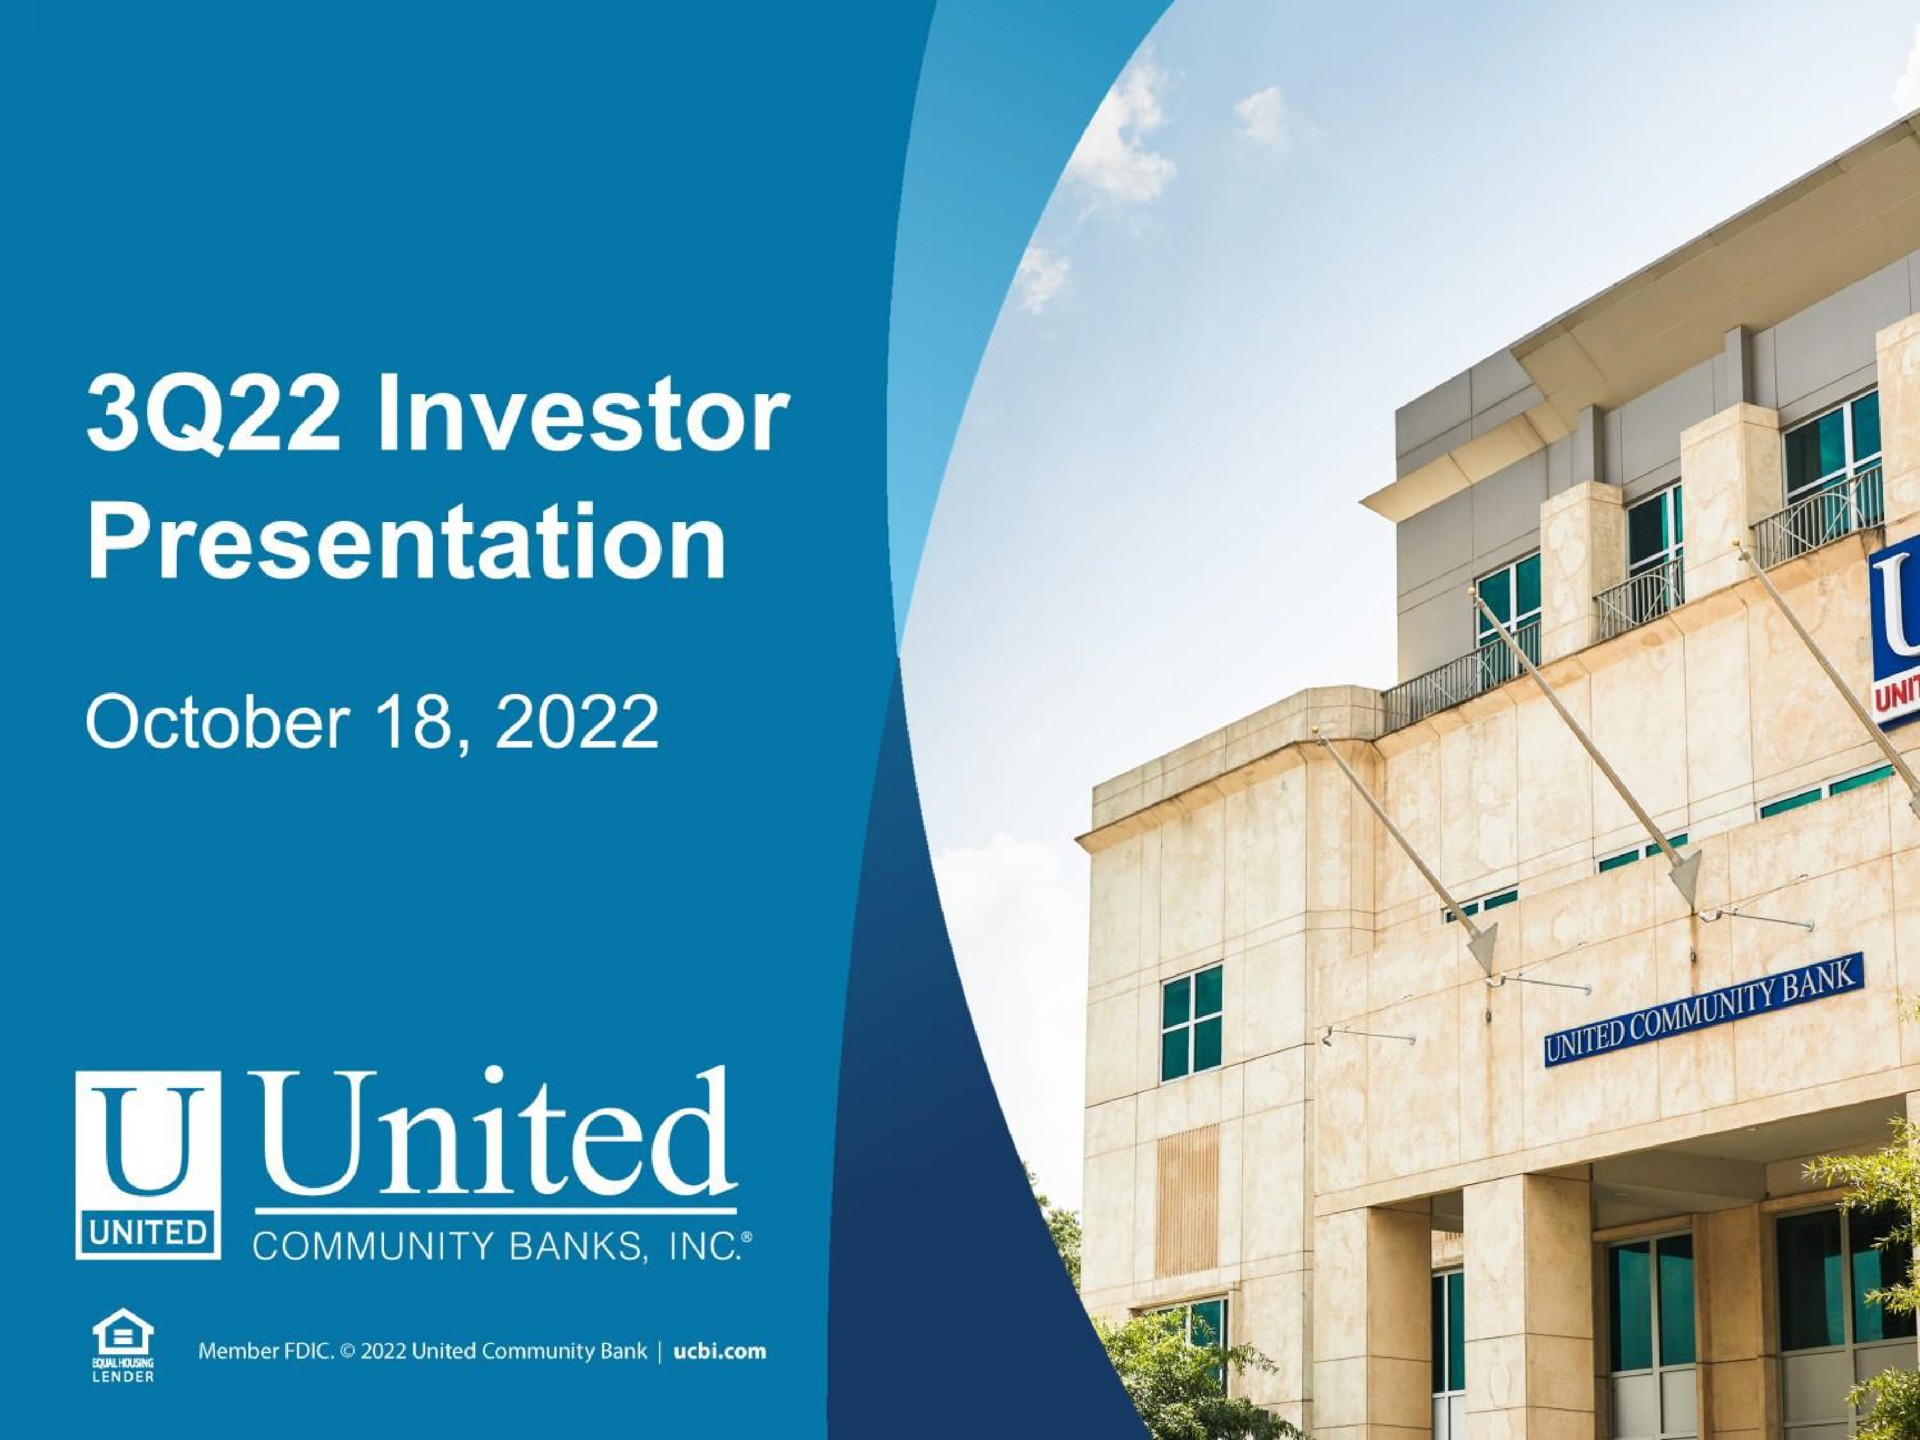 investor presentation united | United Community Banks